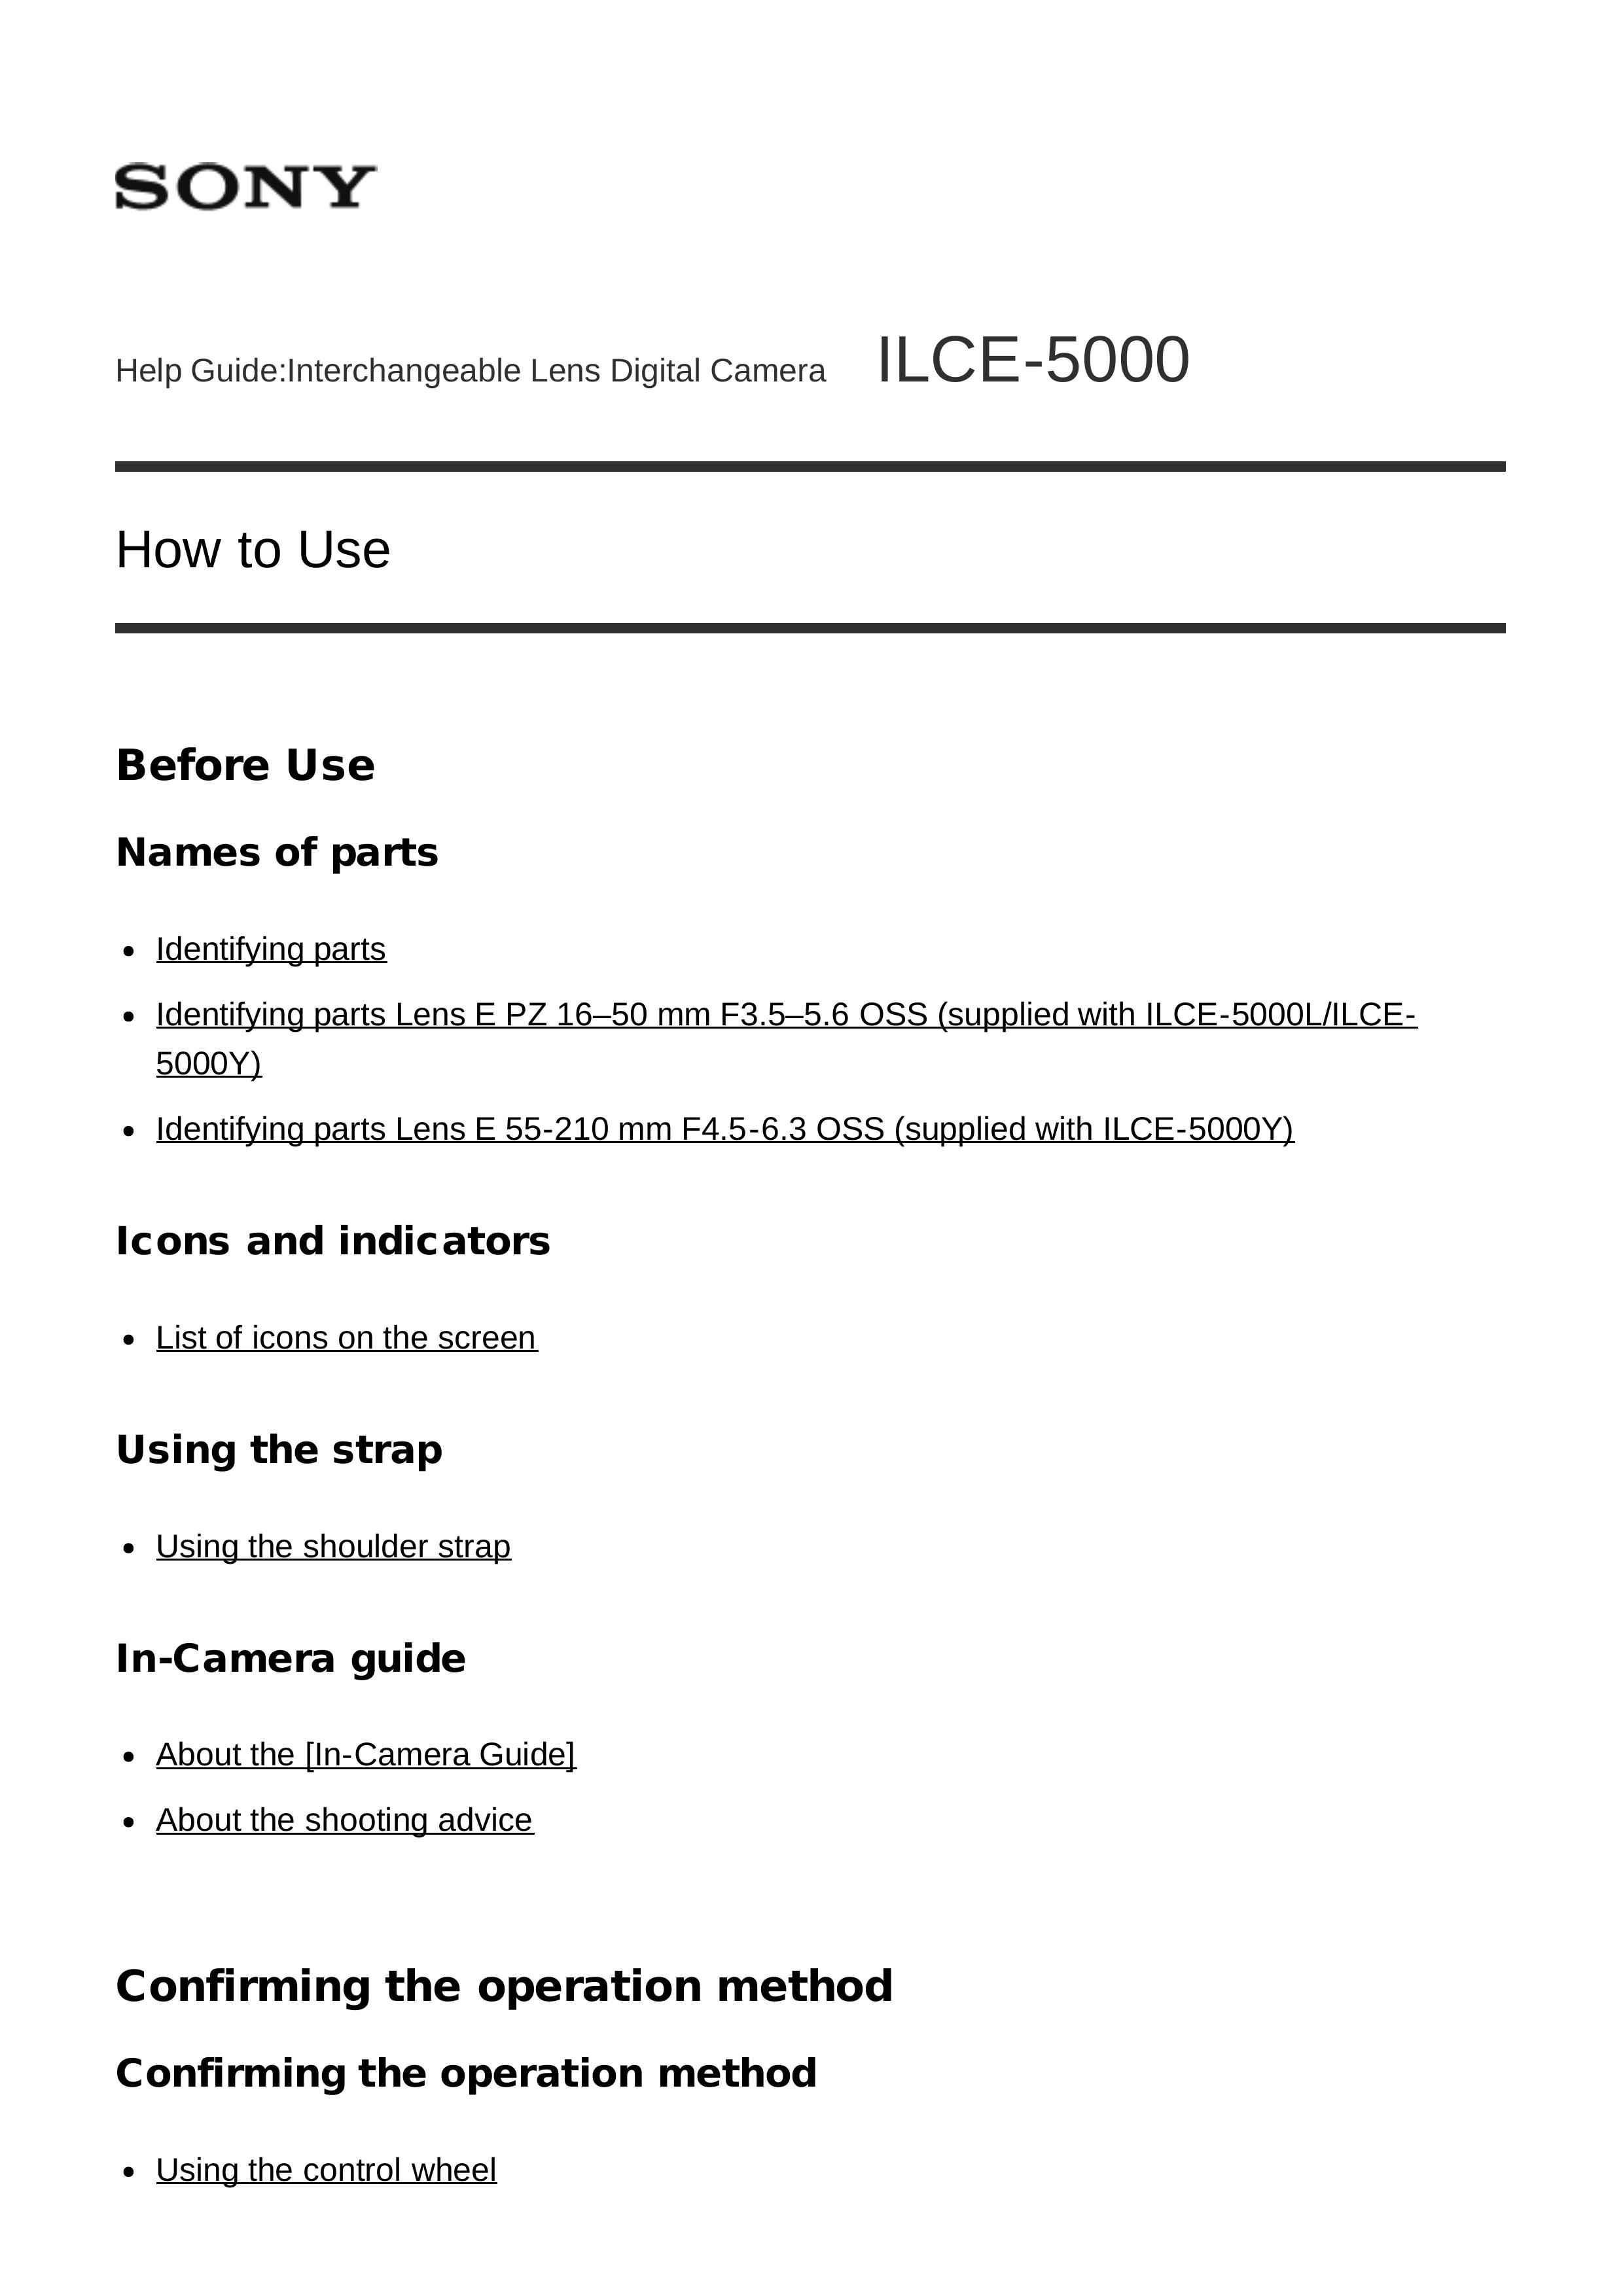 Sony ILCE-5000 Camera Lens User Manual